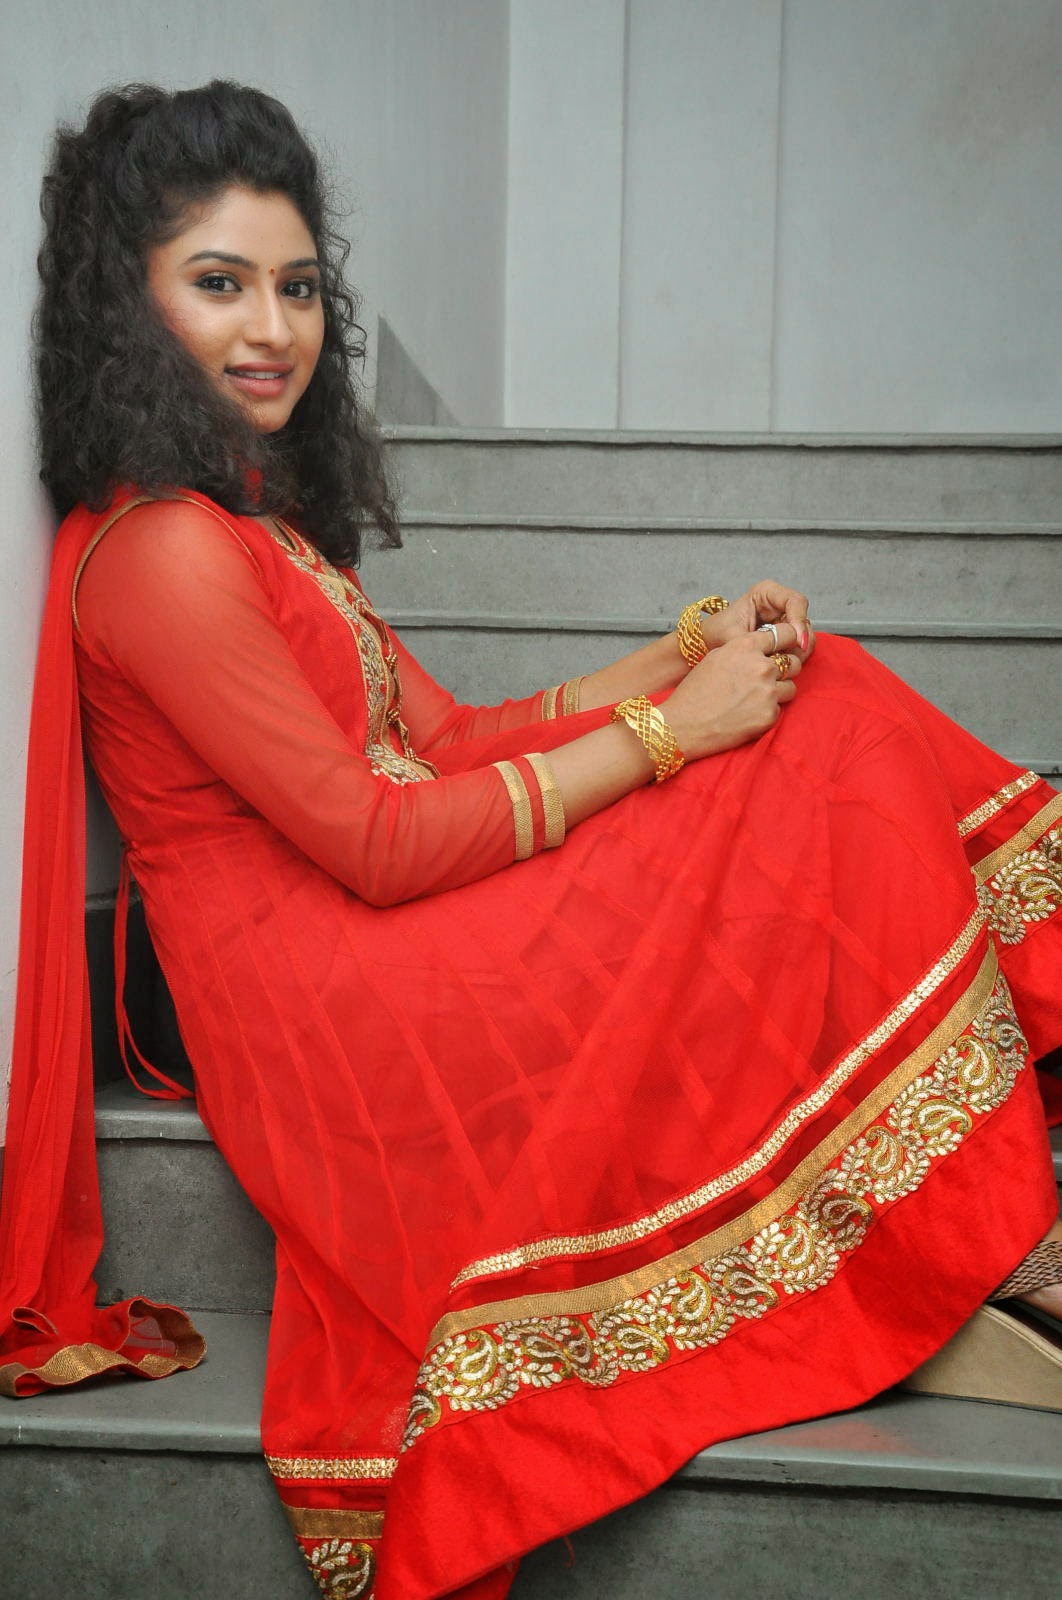 Vishnu Priya Stills In Red Salwar Kameez Indian Girls Villa Celebs Beauty Fashion And